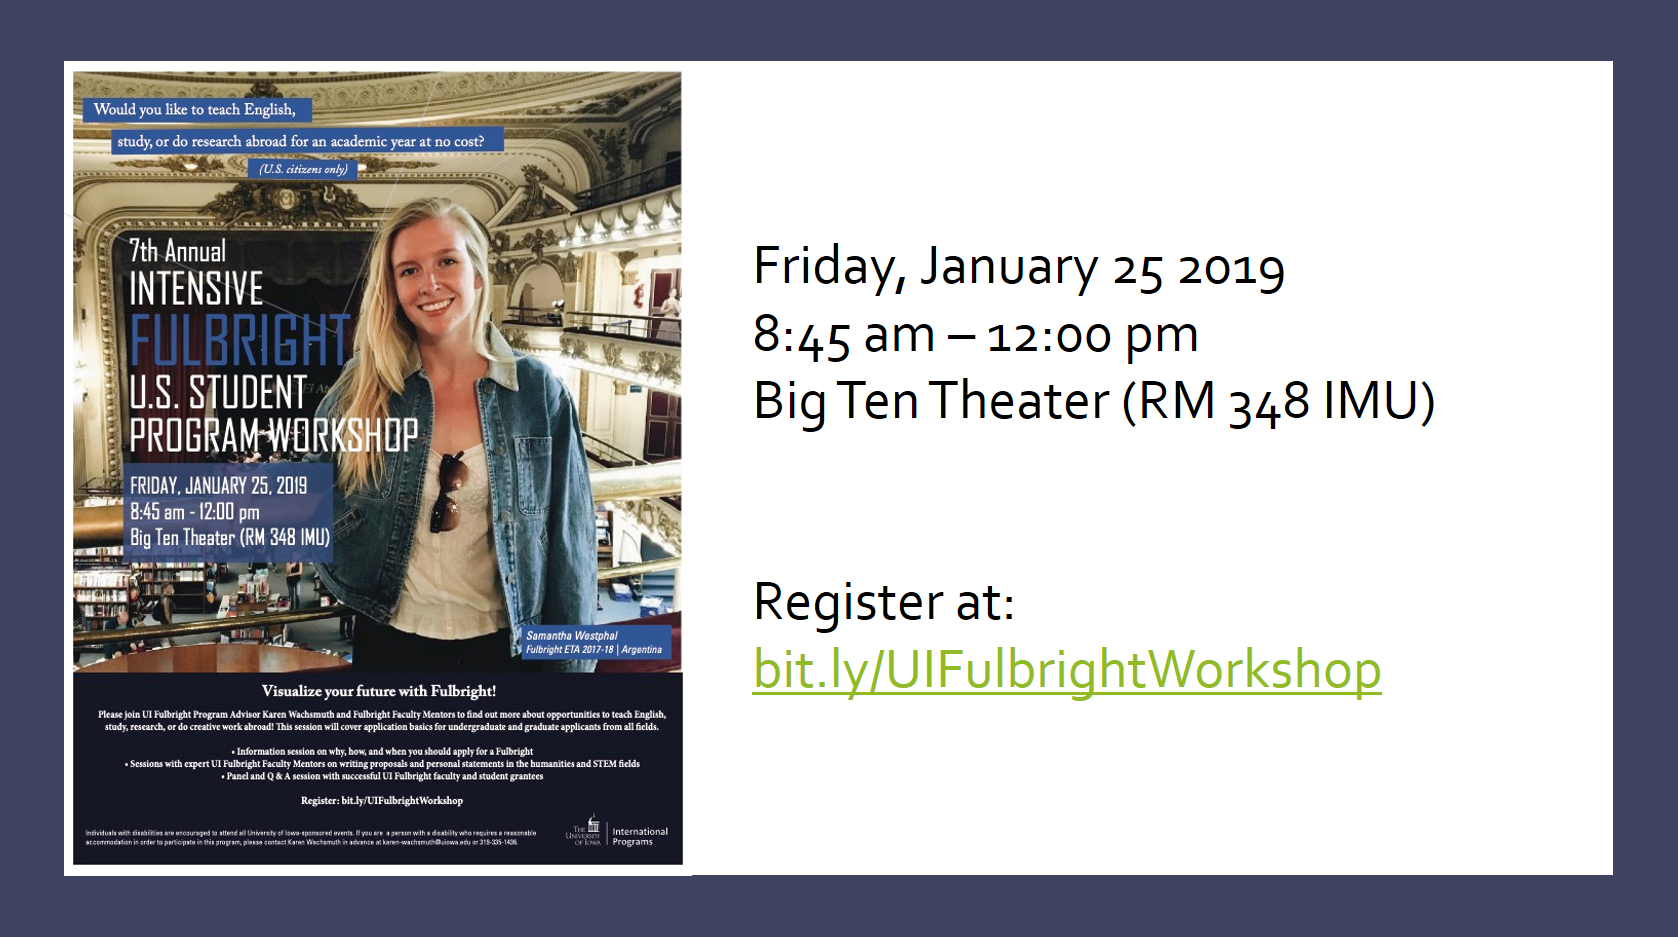 7th Annual Fulbright U.S. Student Program Workshop: Friday, January 25, 2019 8:45 AM-12 PM, Big Ten Theater (RM 348 IMU) Register at: bit.ly/UIFulbrightWorkshop